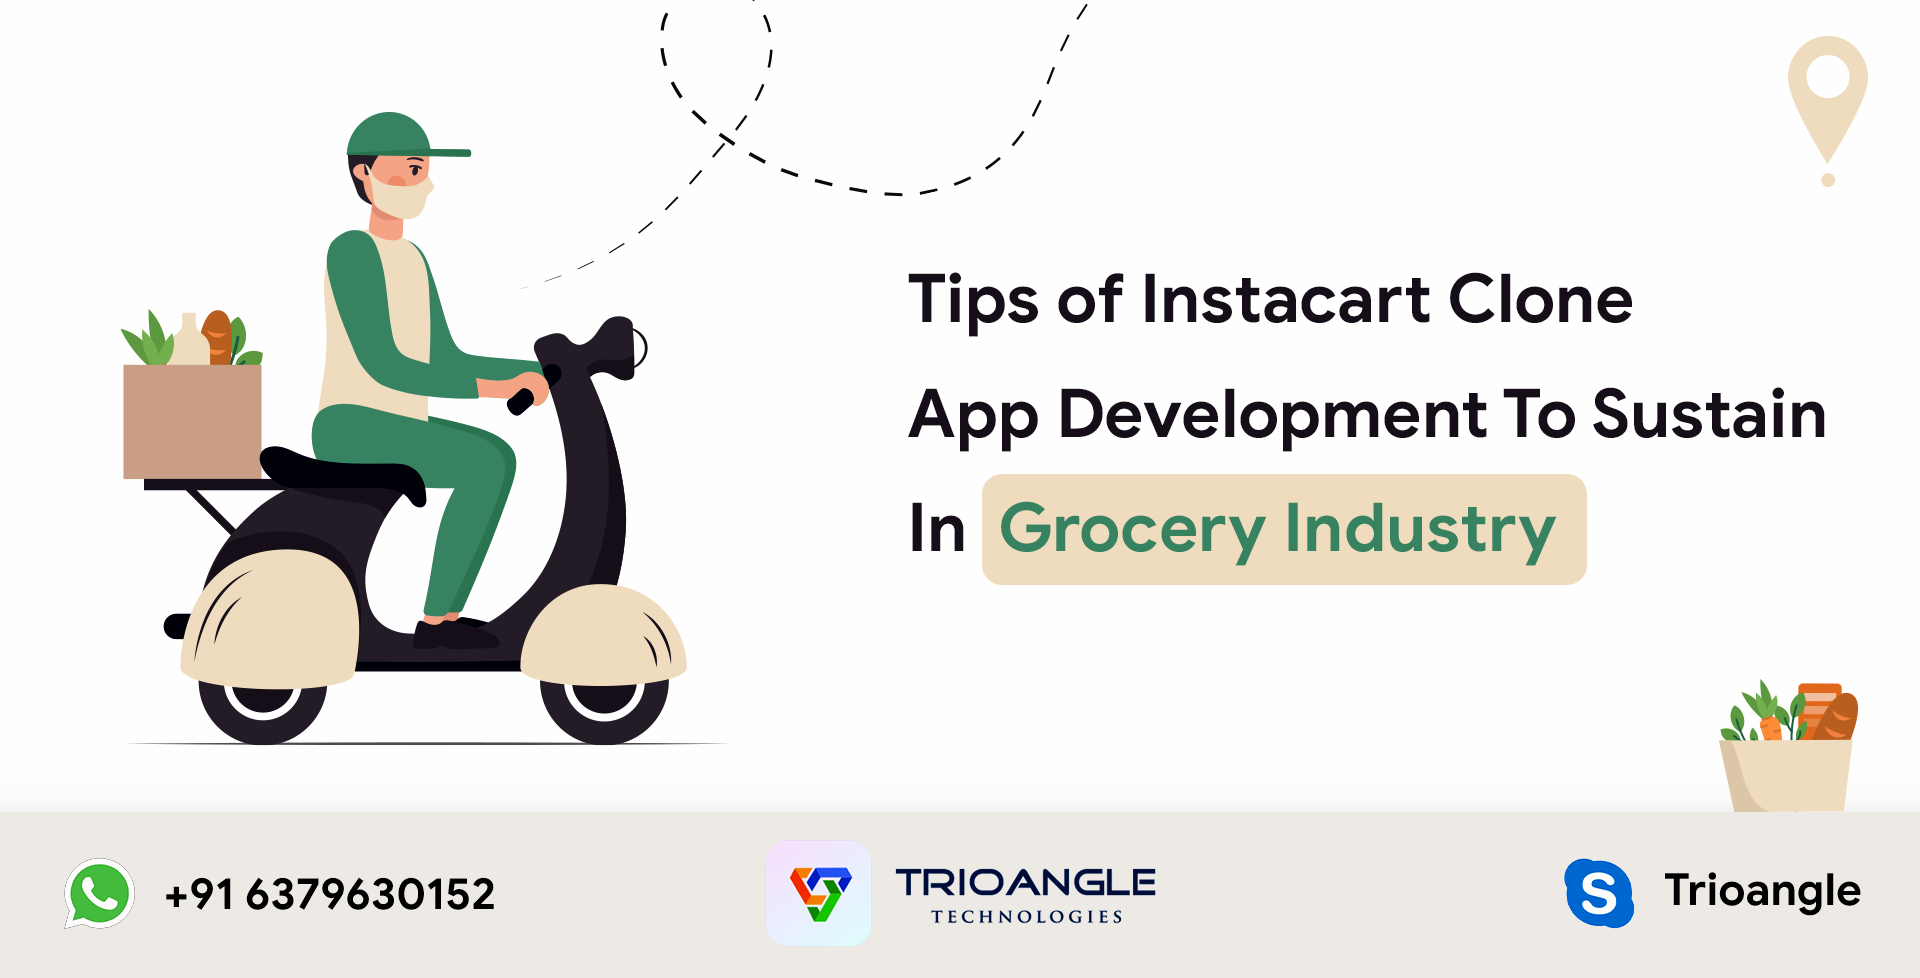 Tips of Instacart Clone App Development to Sustain in Grocery Industry